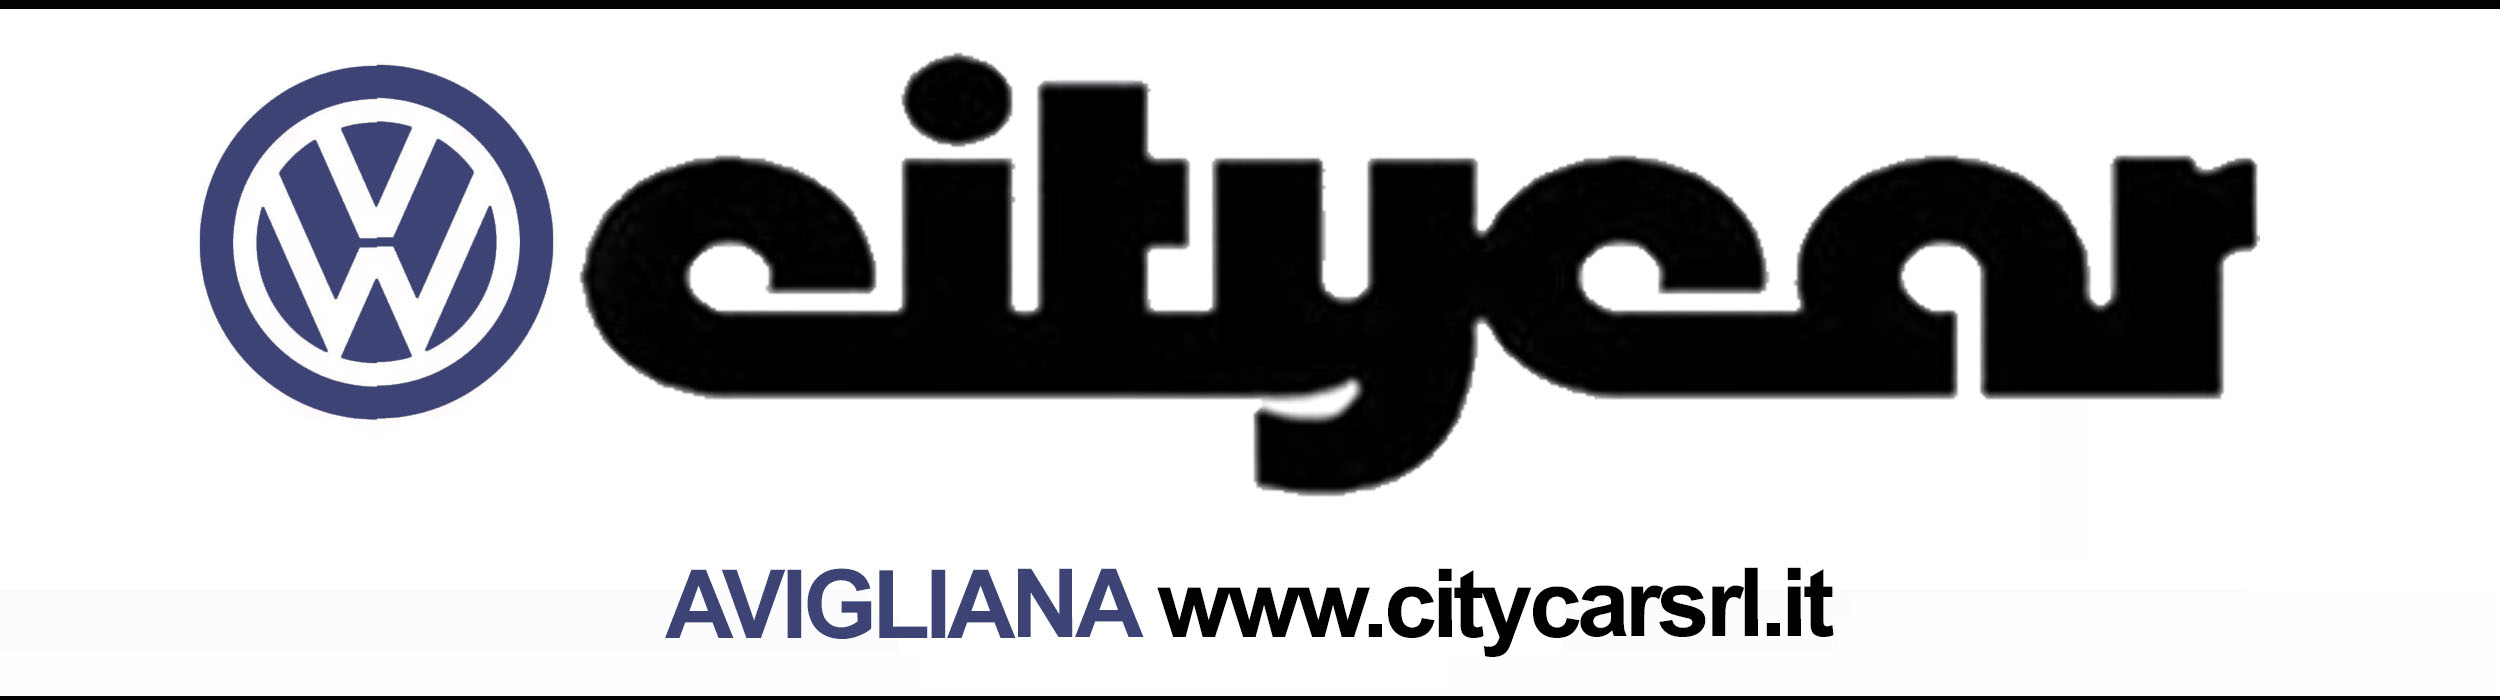 citycar banner